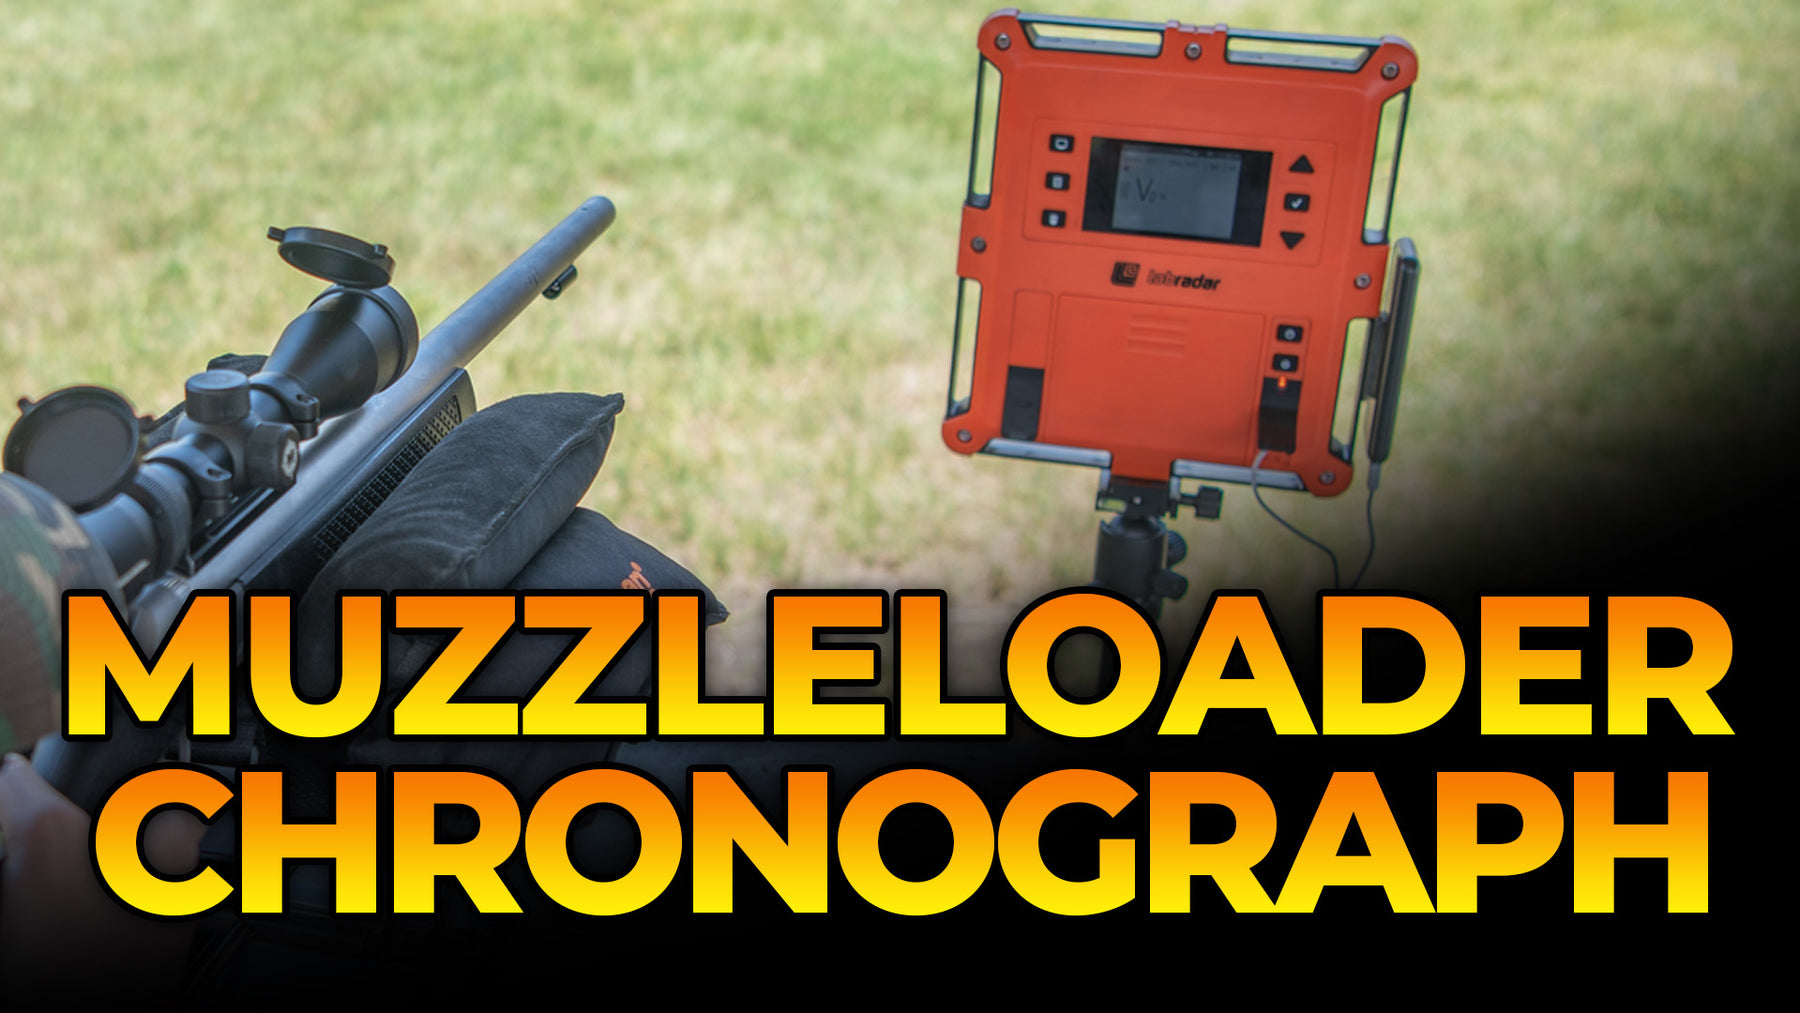 Using a LabRadar Chronograph with a Muzzleloader